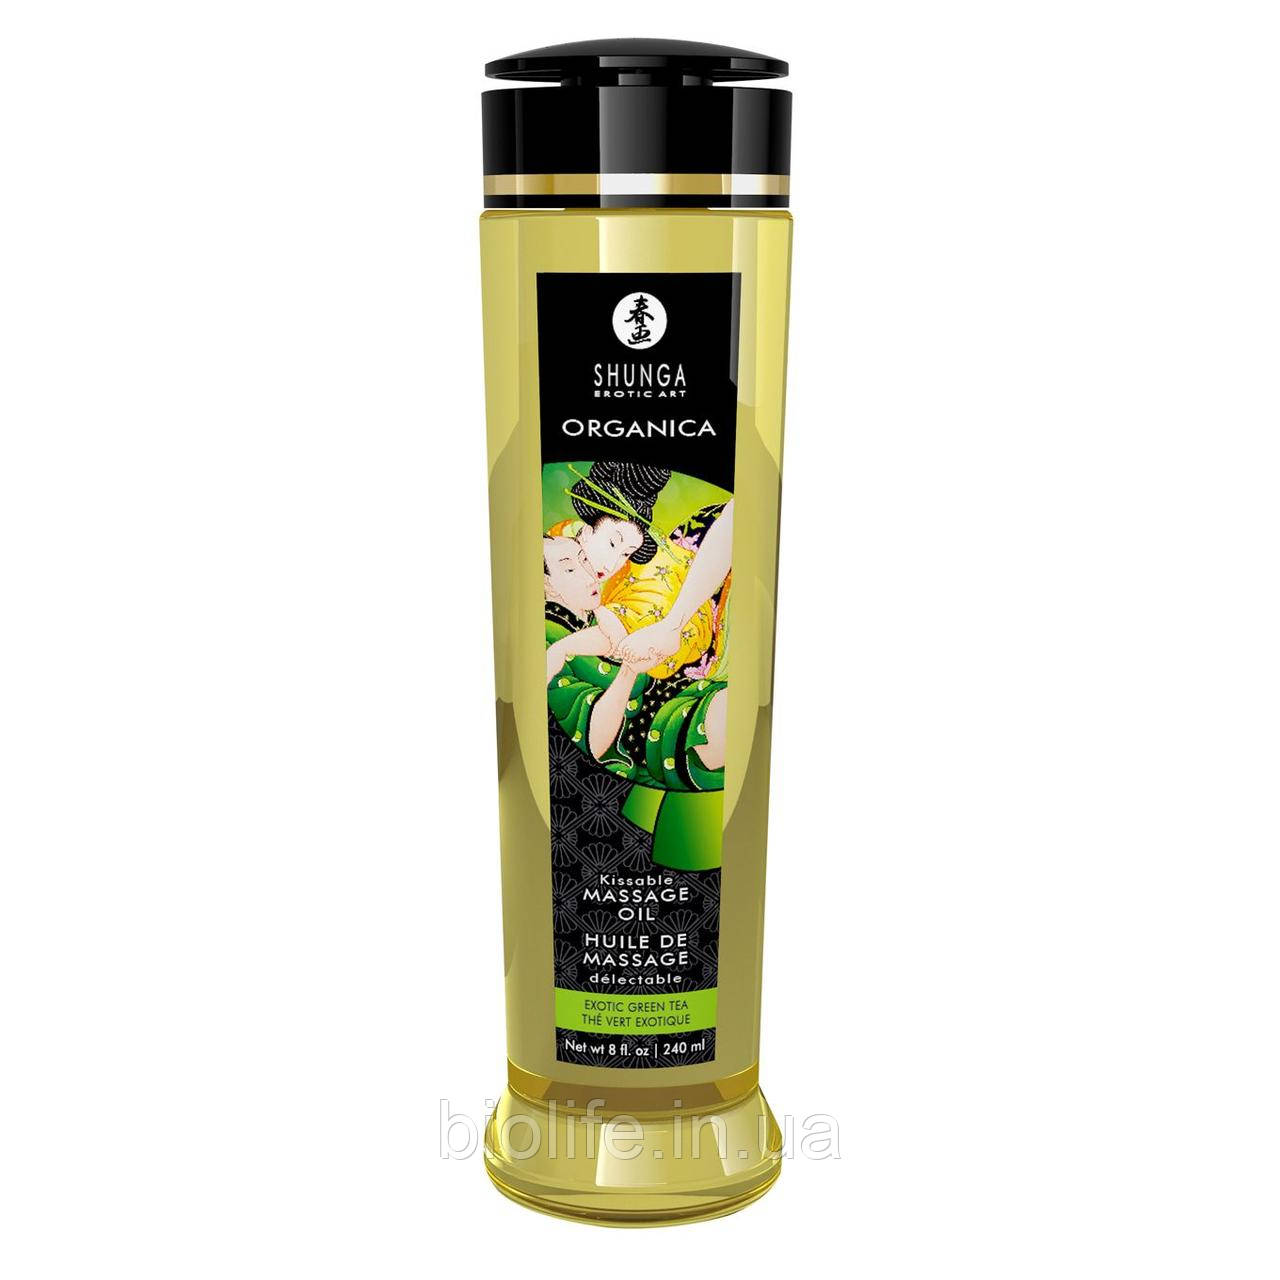 Органічна масажна олія Shunga ORGANICA — Exotic green tea (240 мл) з вітаміном Е